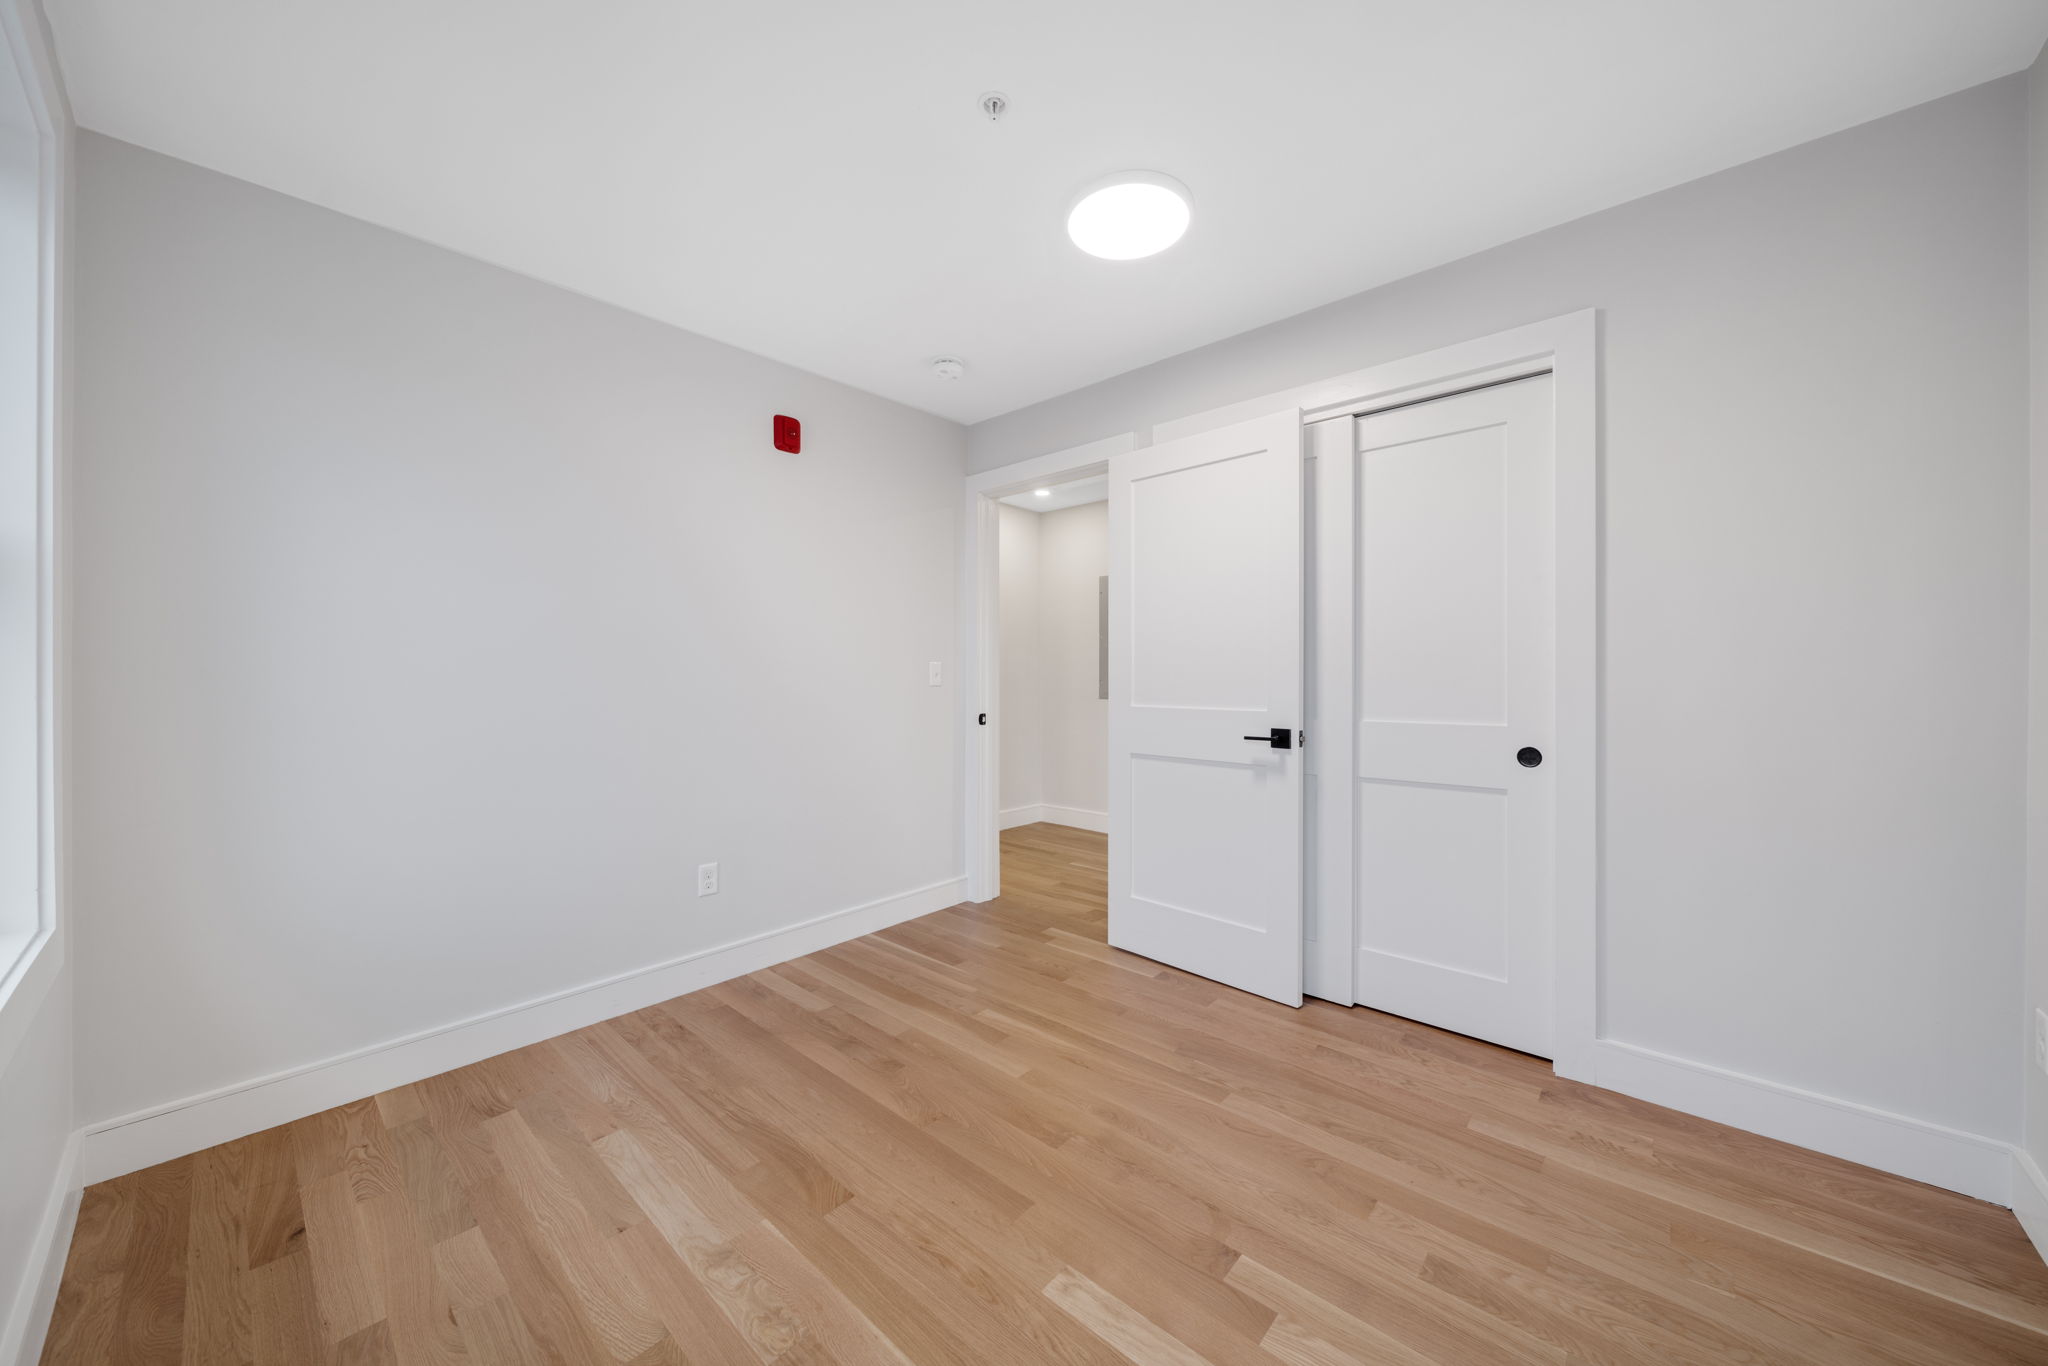 Photos of apartment on Wenham St.,Boston MA 02130